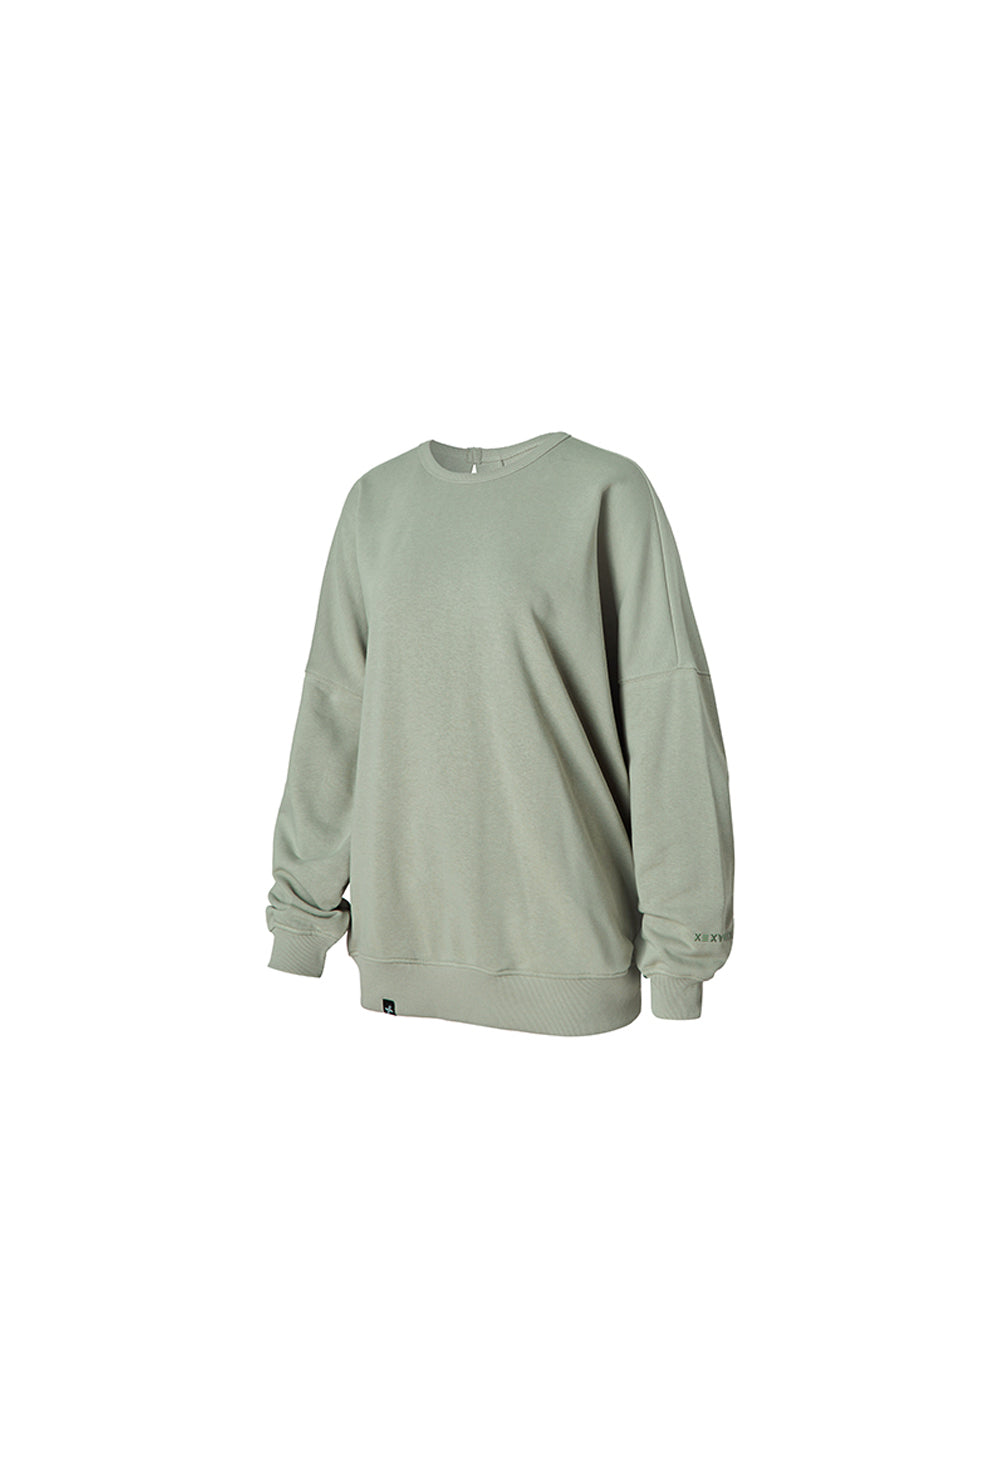 Back Open Loose Fit Sweatshirt - Shimmer Sage (Clearance)